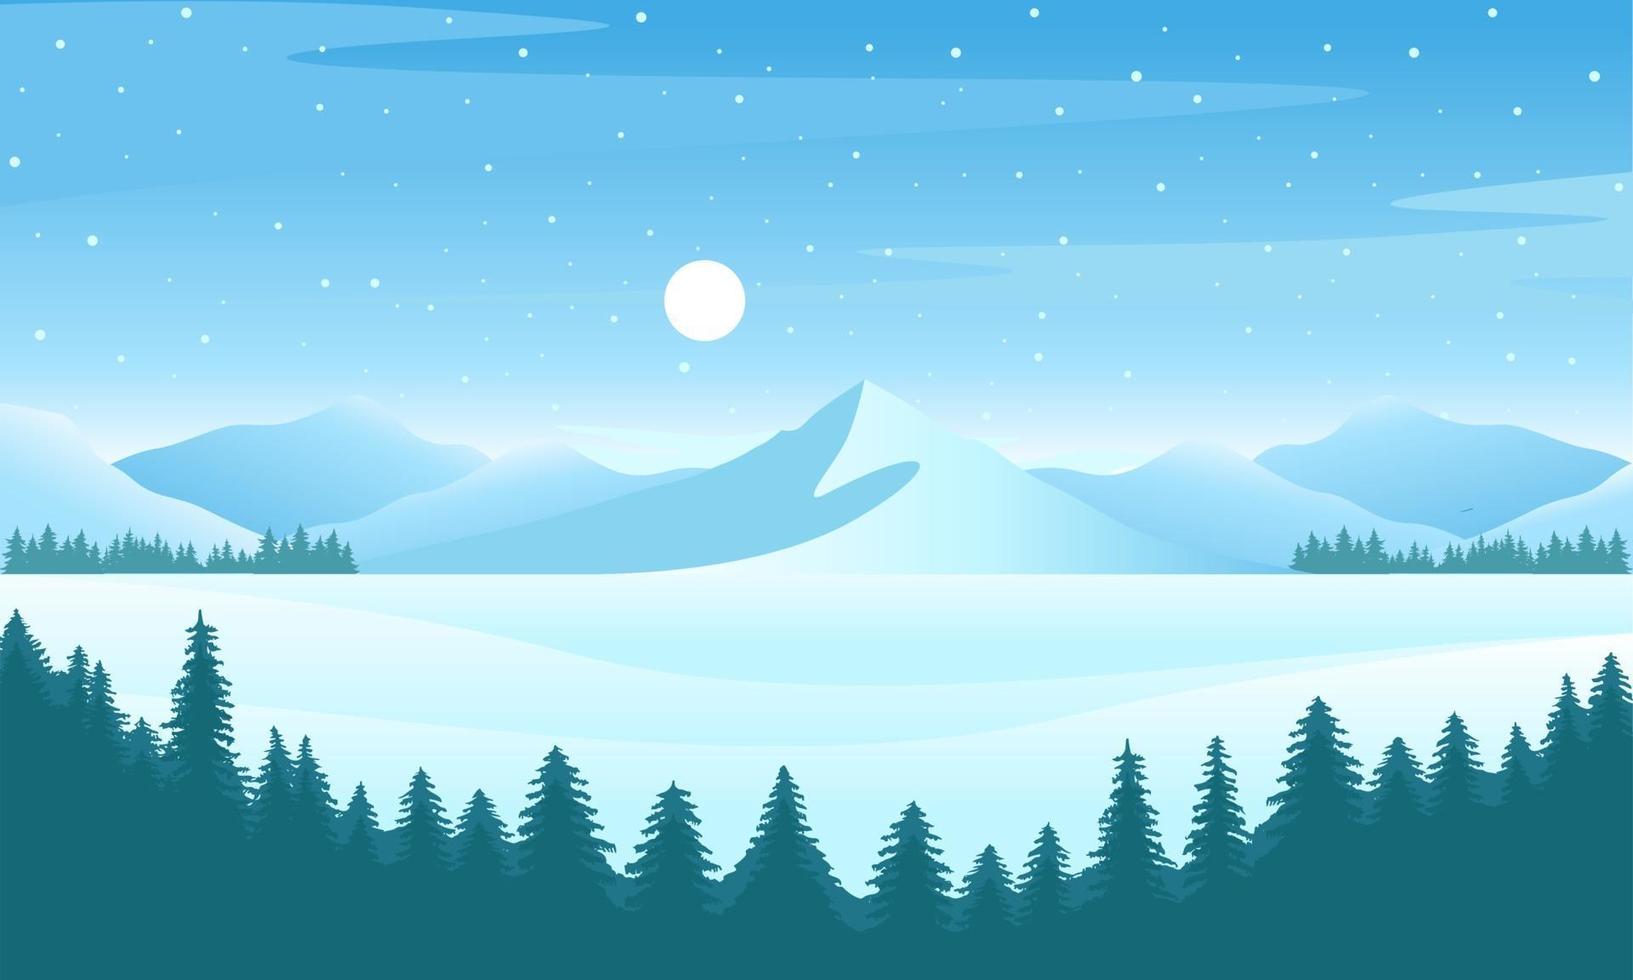 Vector winter landscape illustration. Mountain tree forest